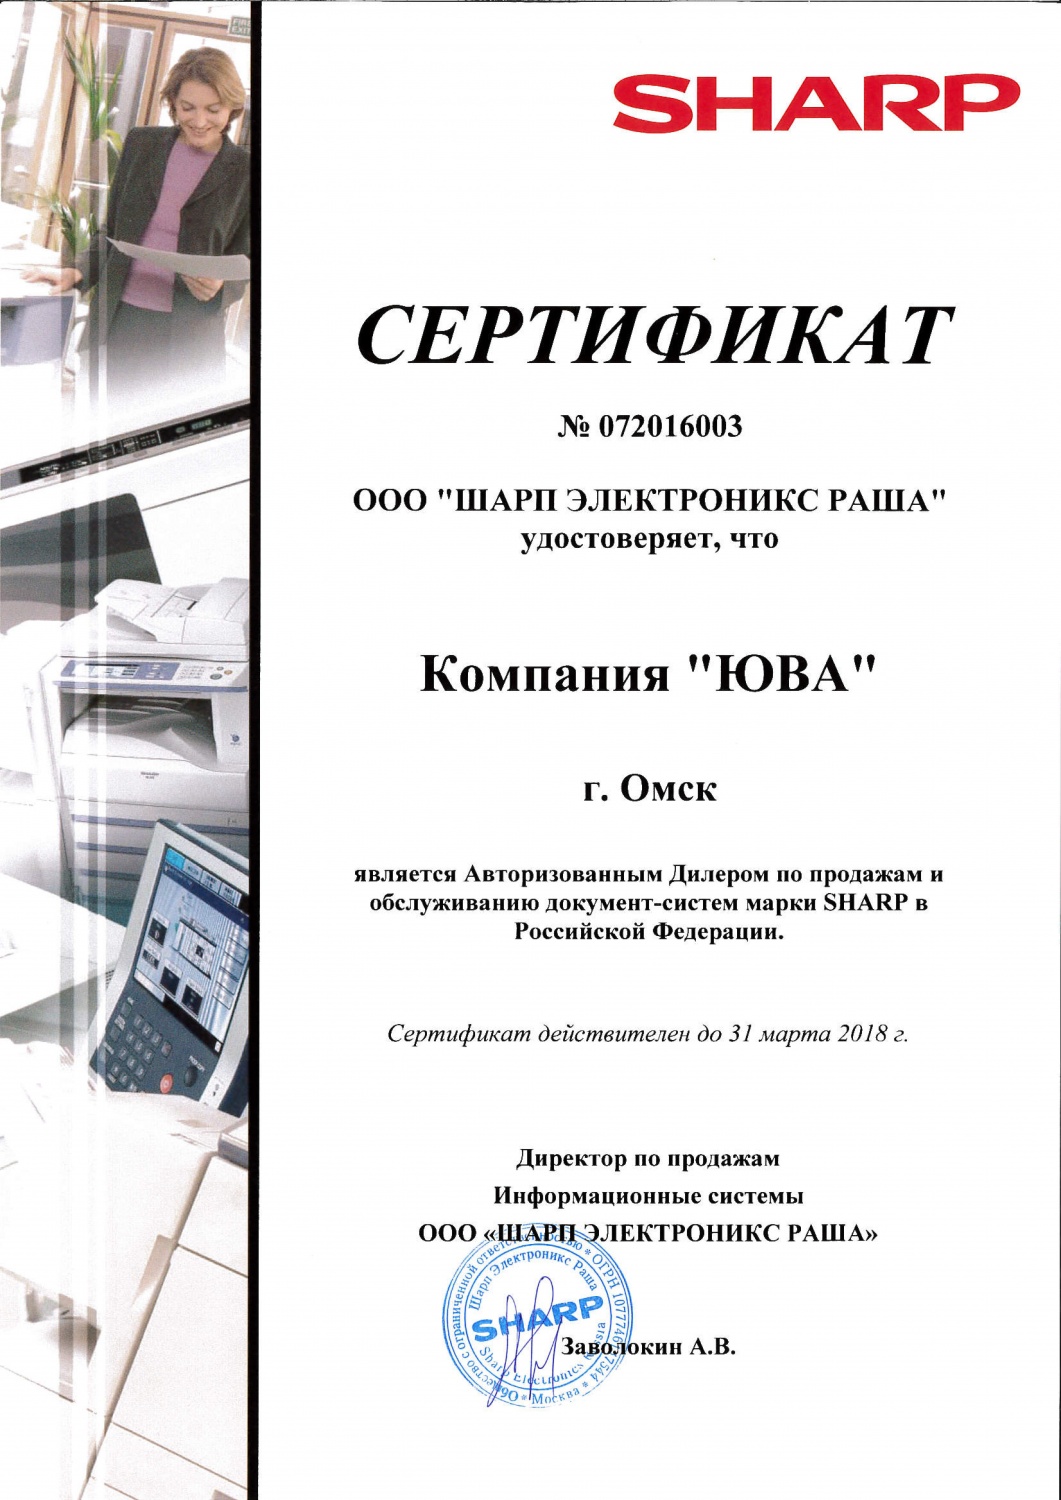 Сертификат Sharp Authorised Dealer